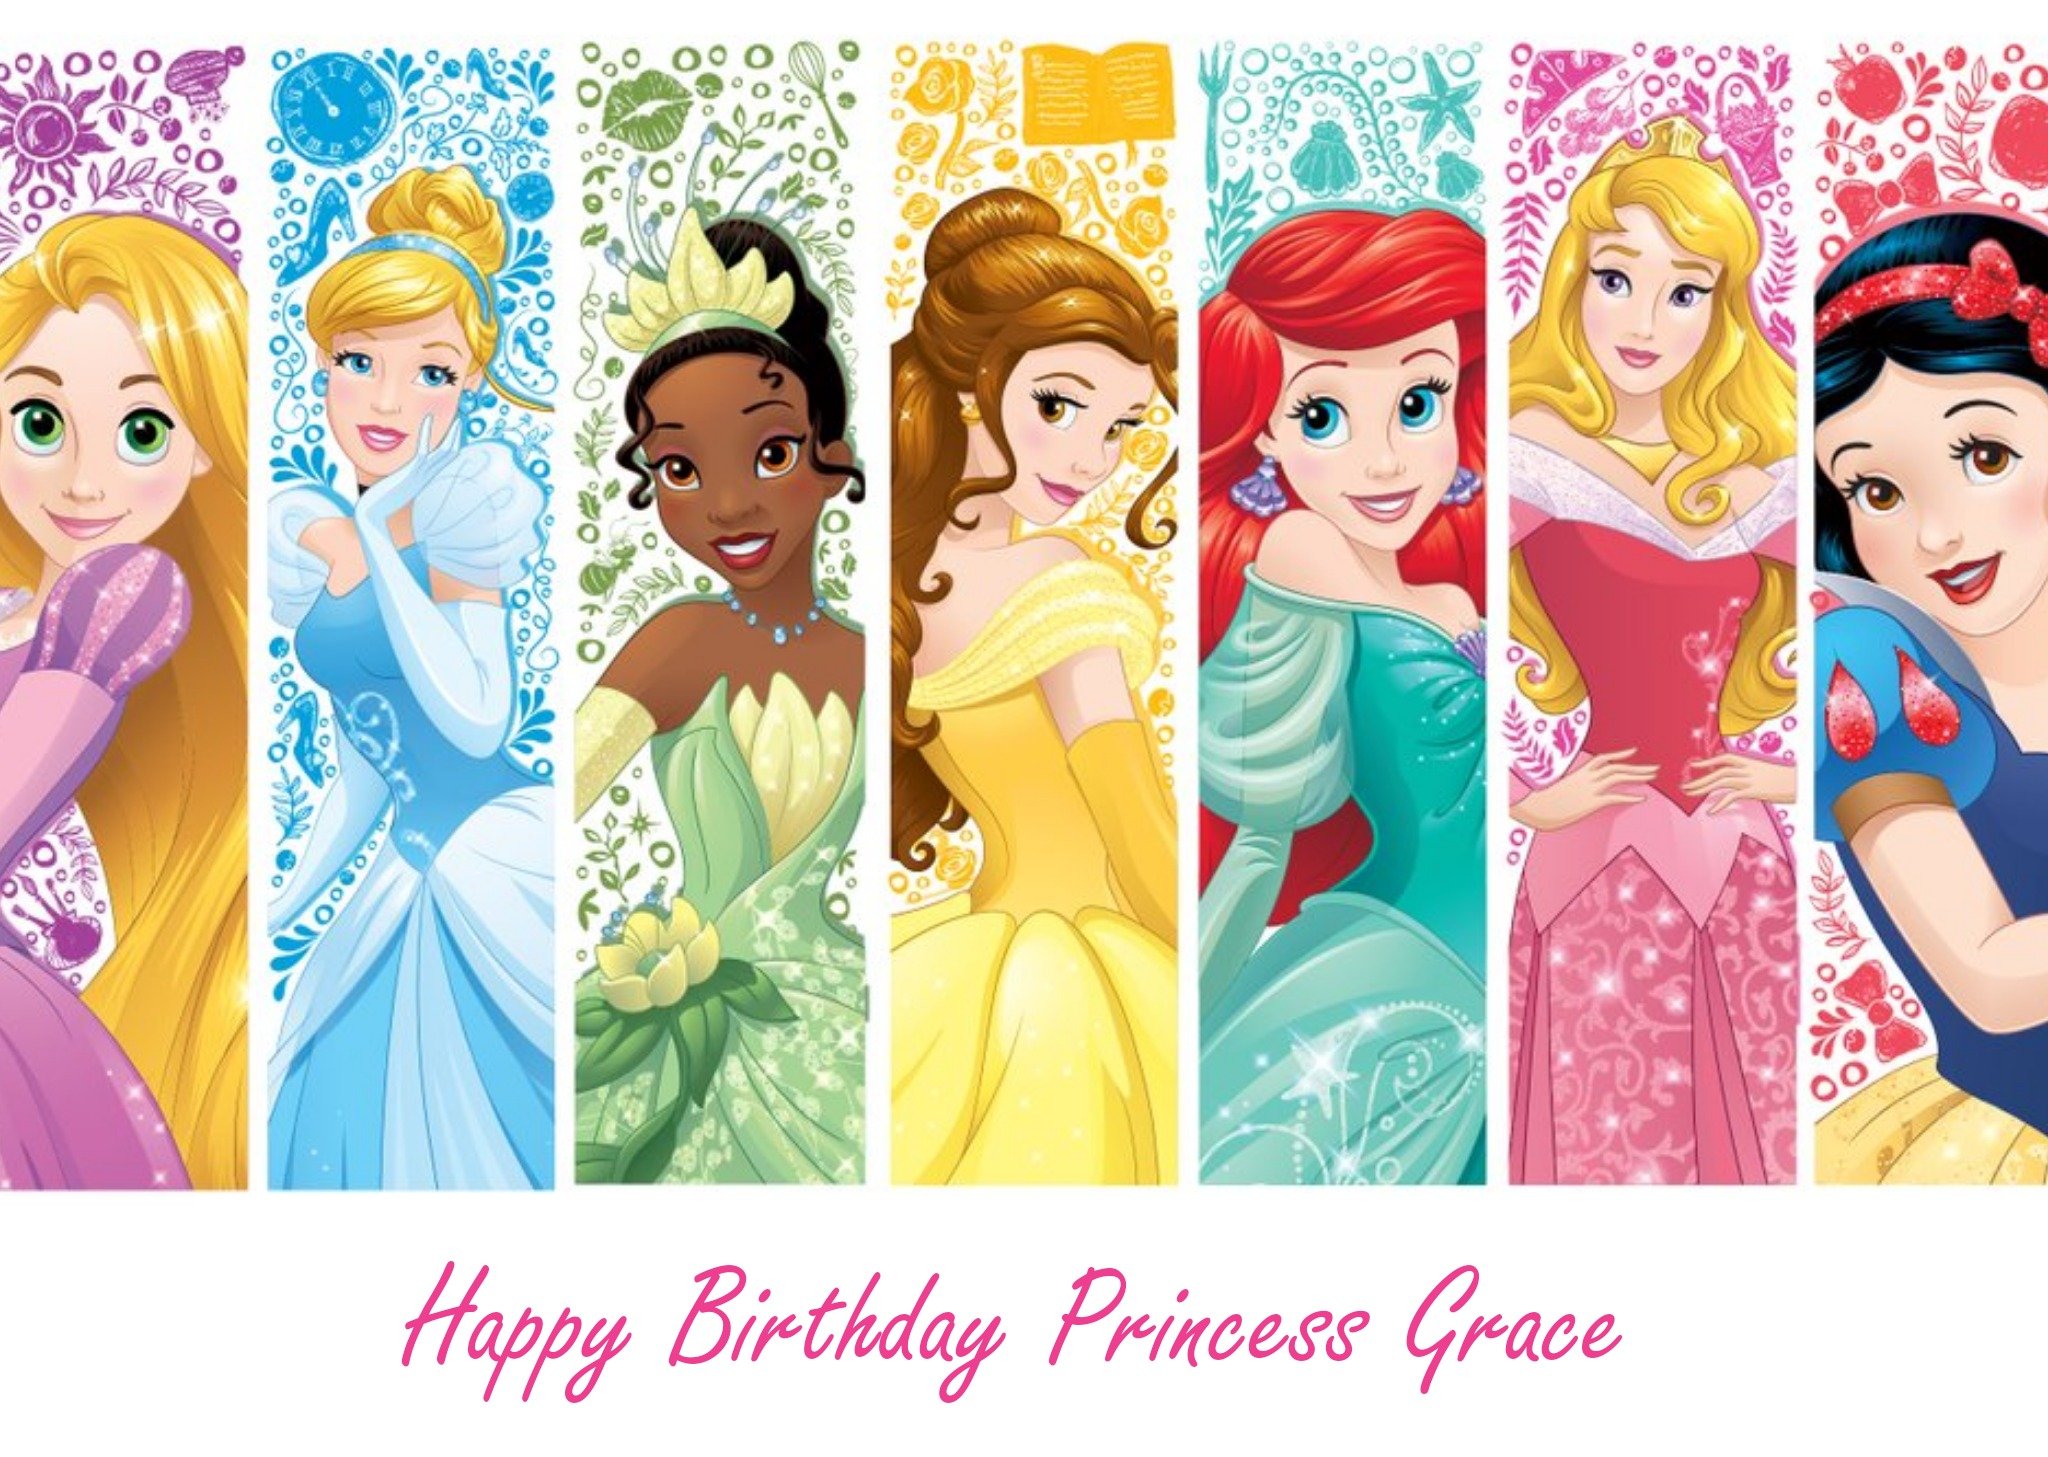 Disney Princess Birthday Card, Large